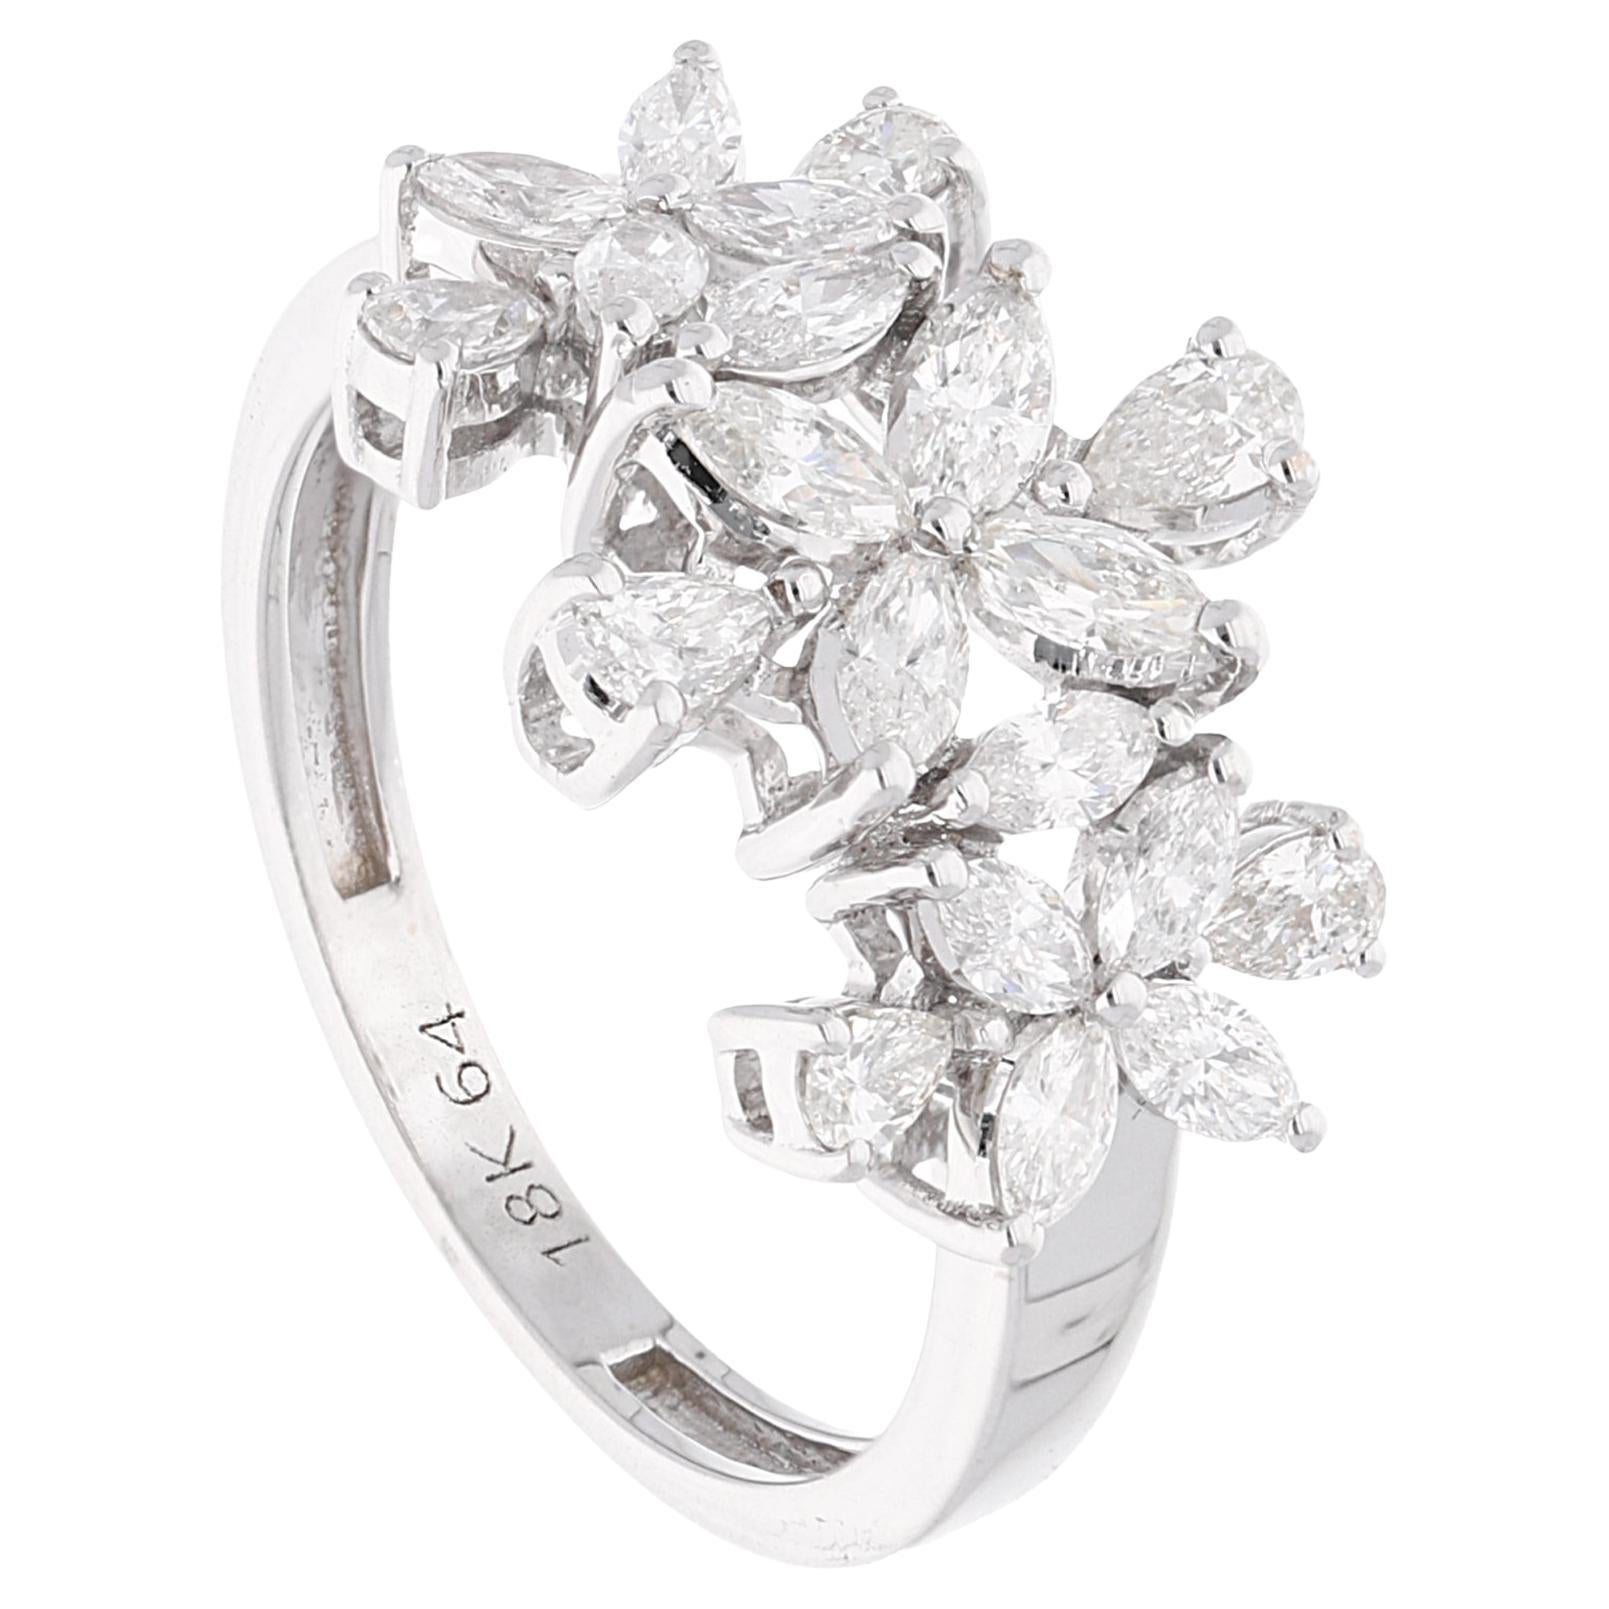 1.10 Carat SI Clarity HI Color Marquise Diamond Ring 18 Karat White Gold Jewelry